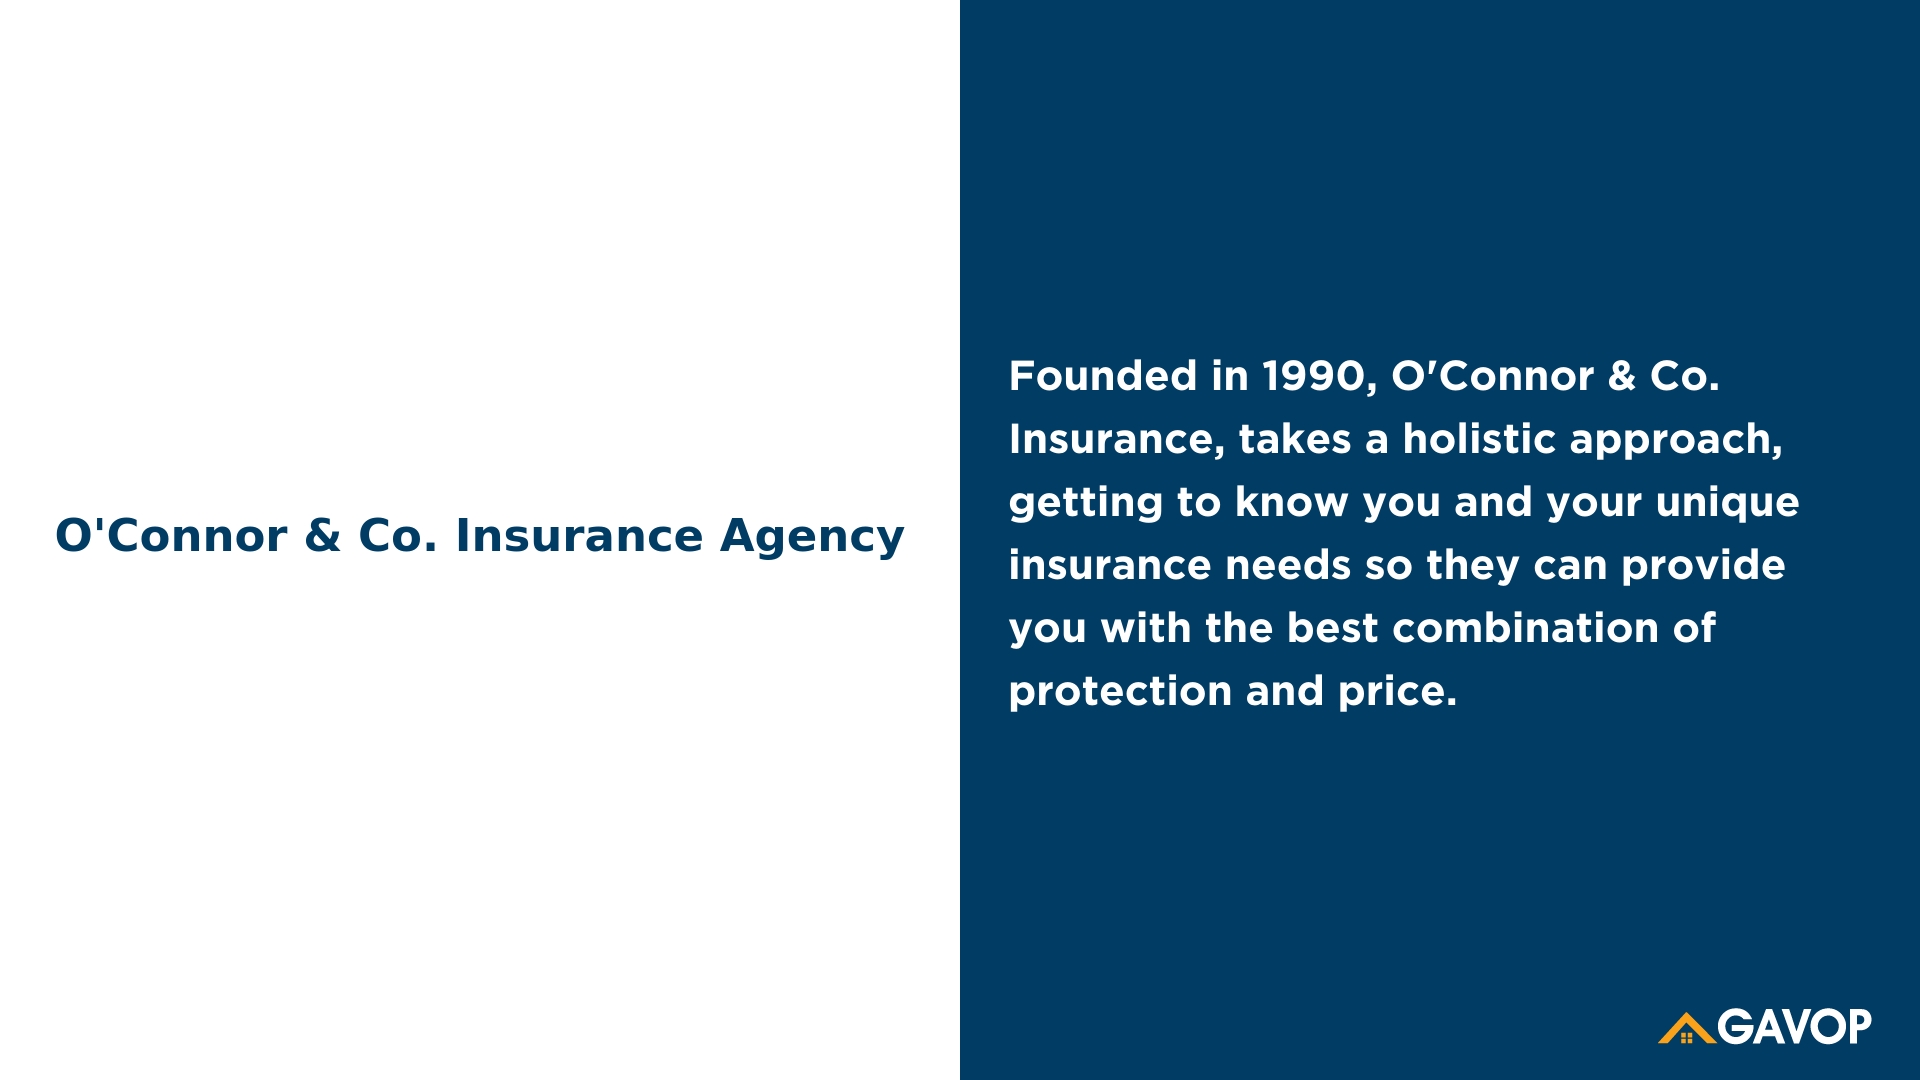 O'Connor & Co. Insurance Agency